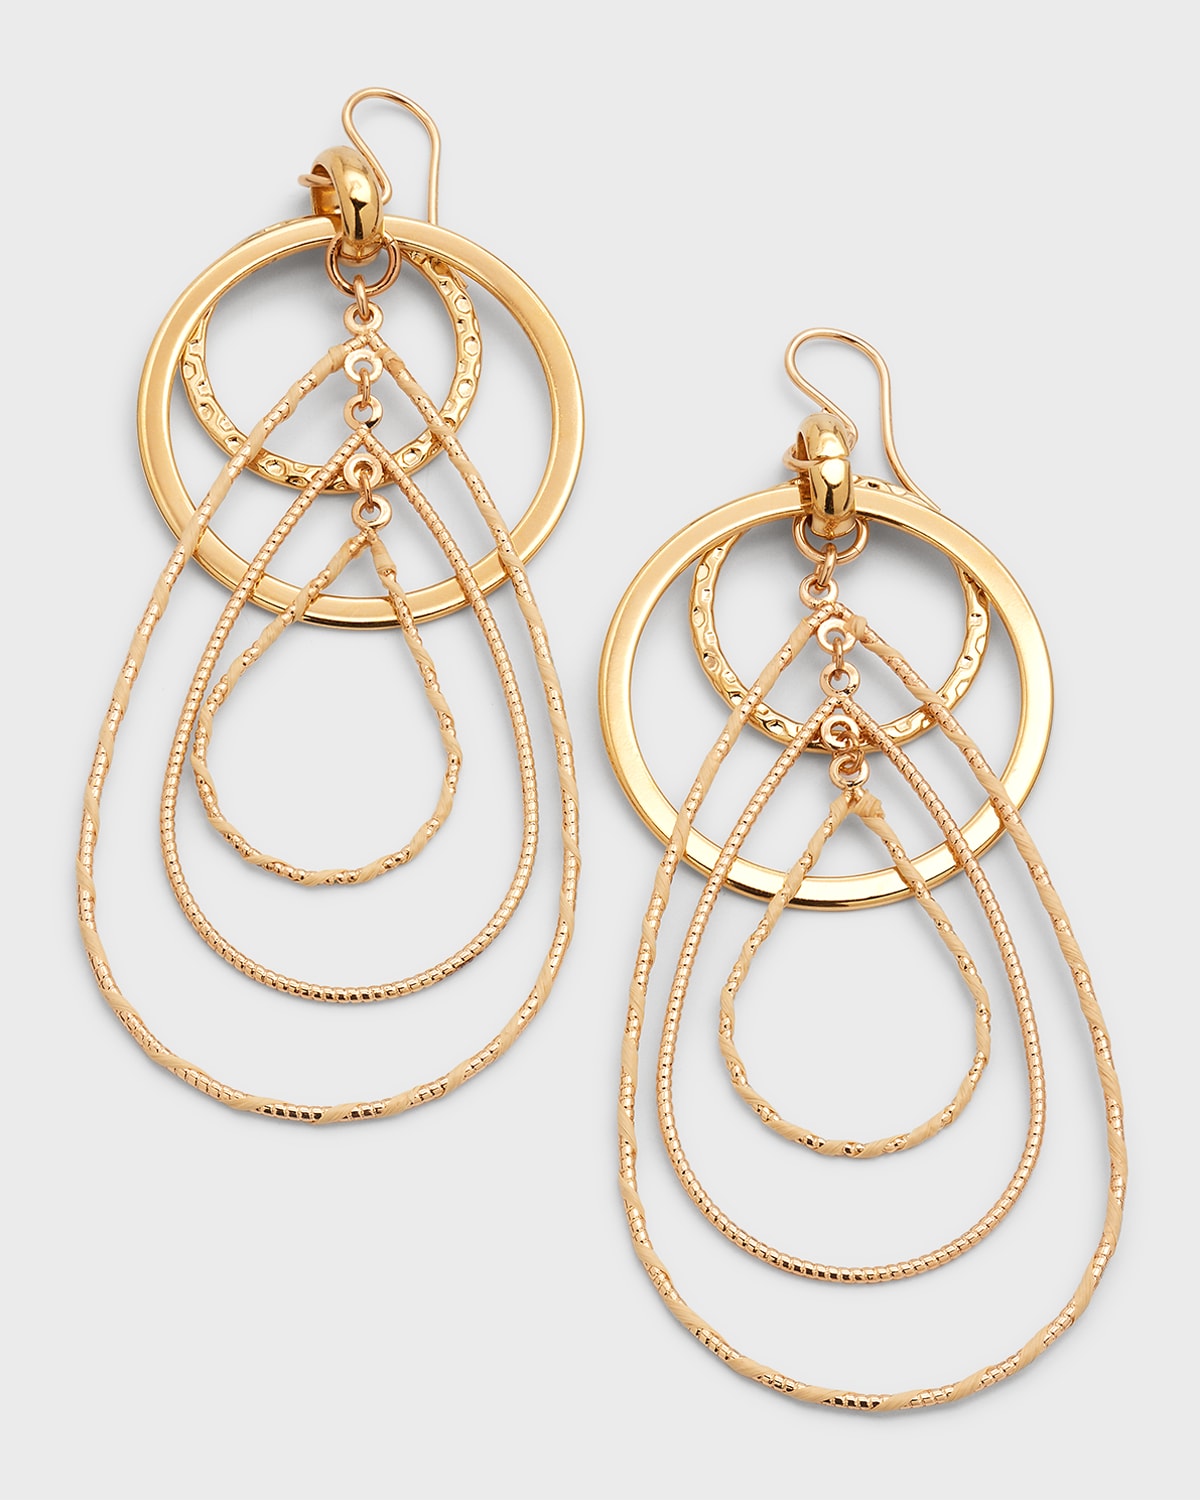 Devon Leigh Multi-link Wrapped Earrings In Gold